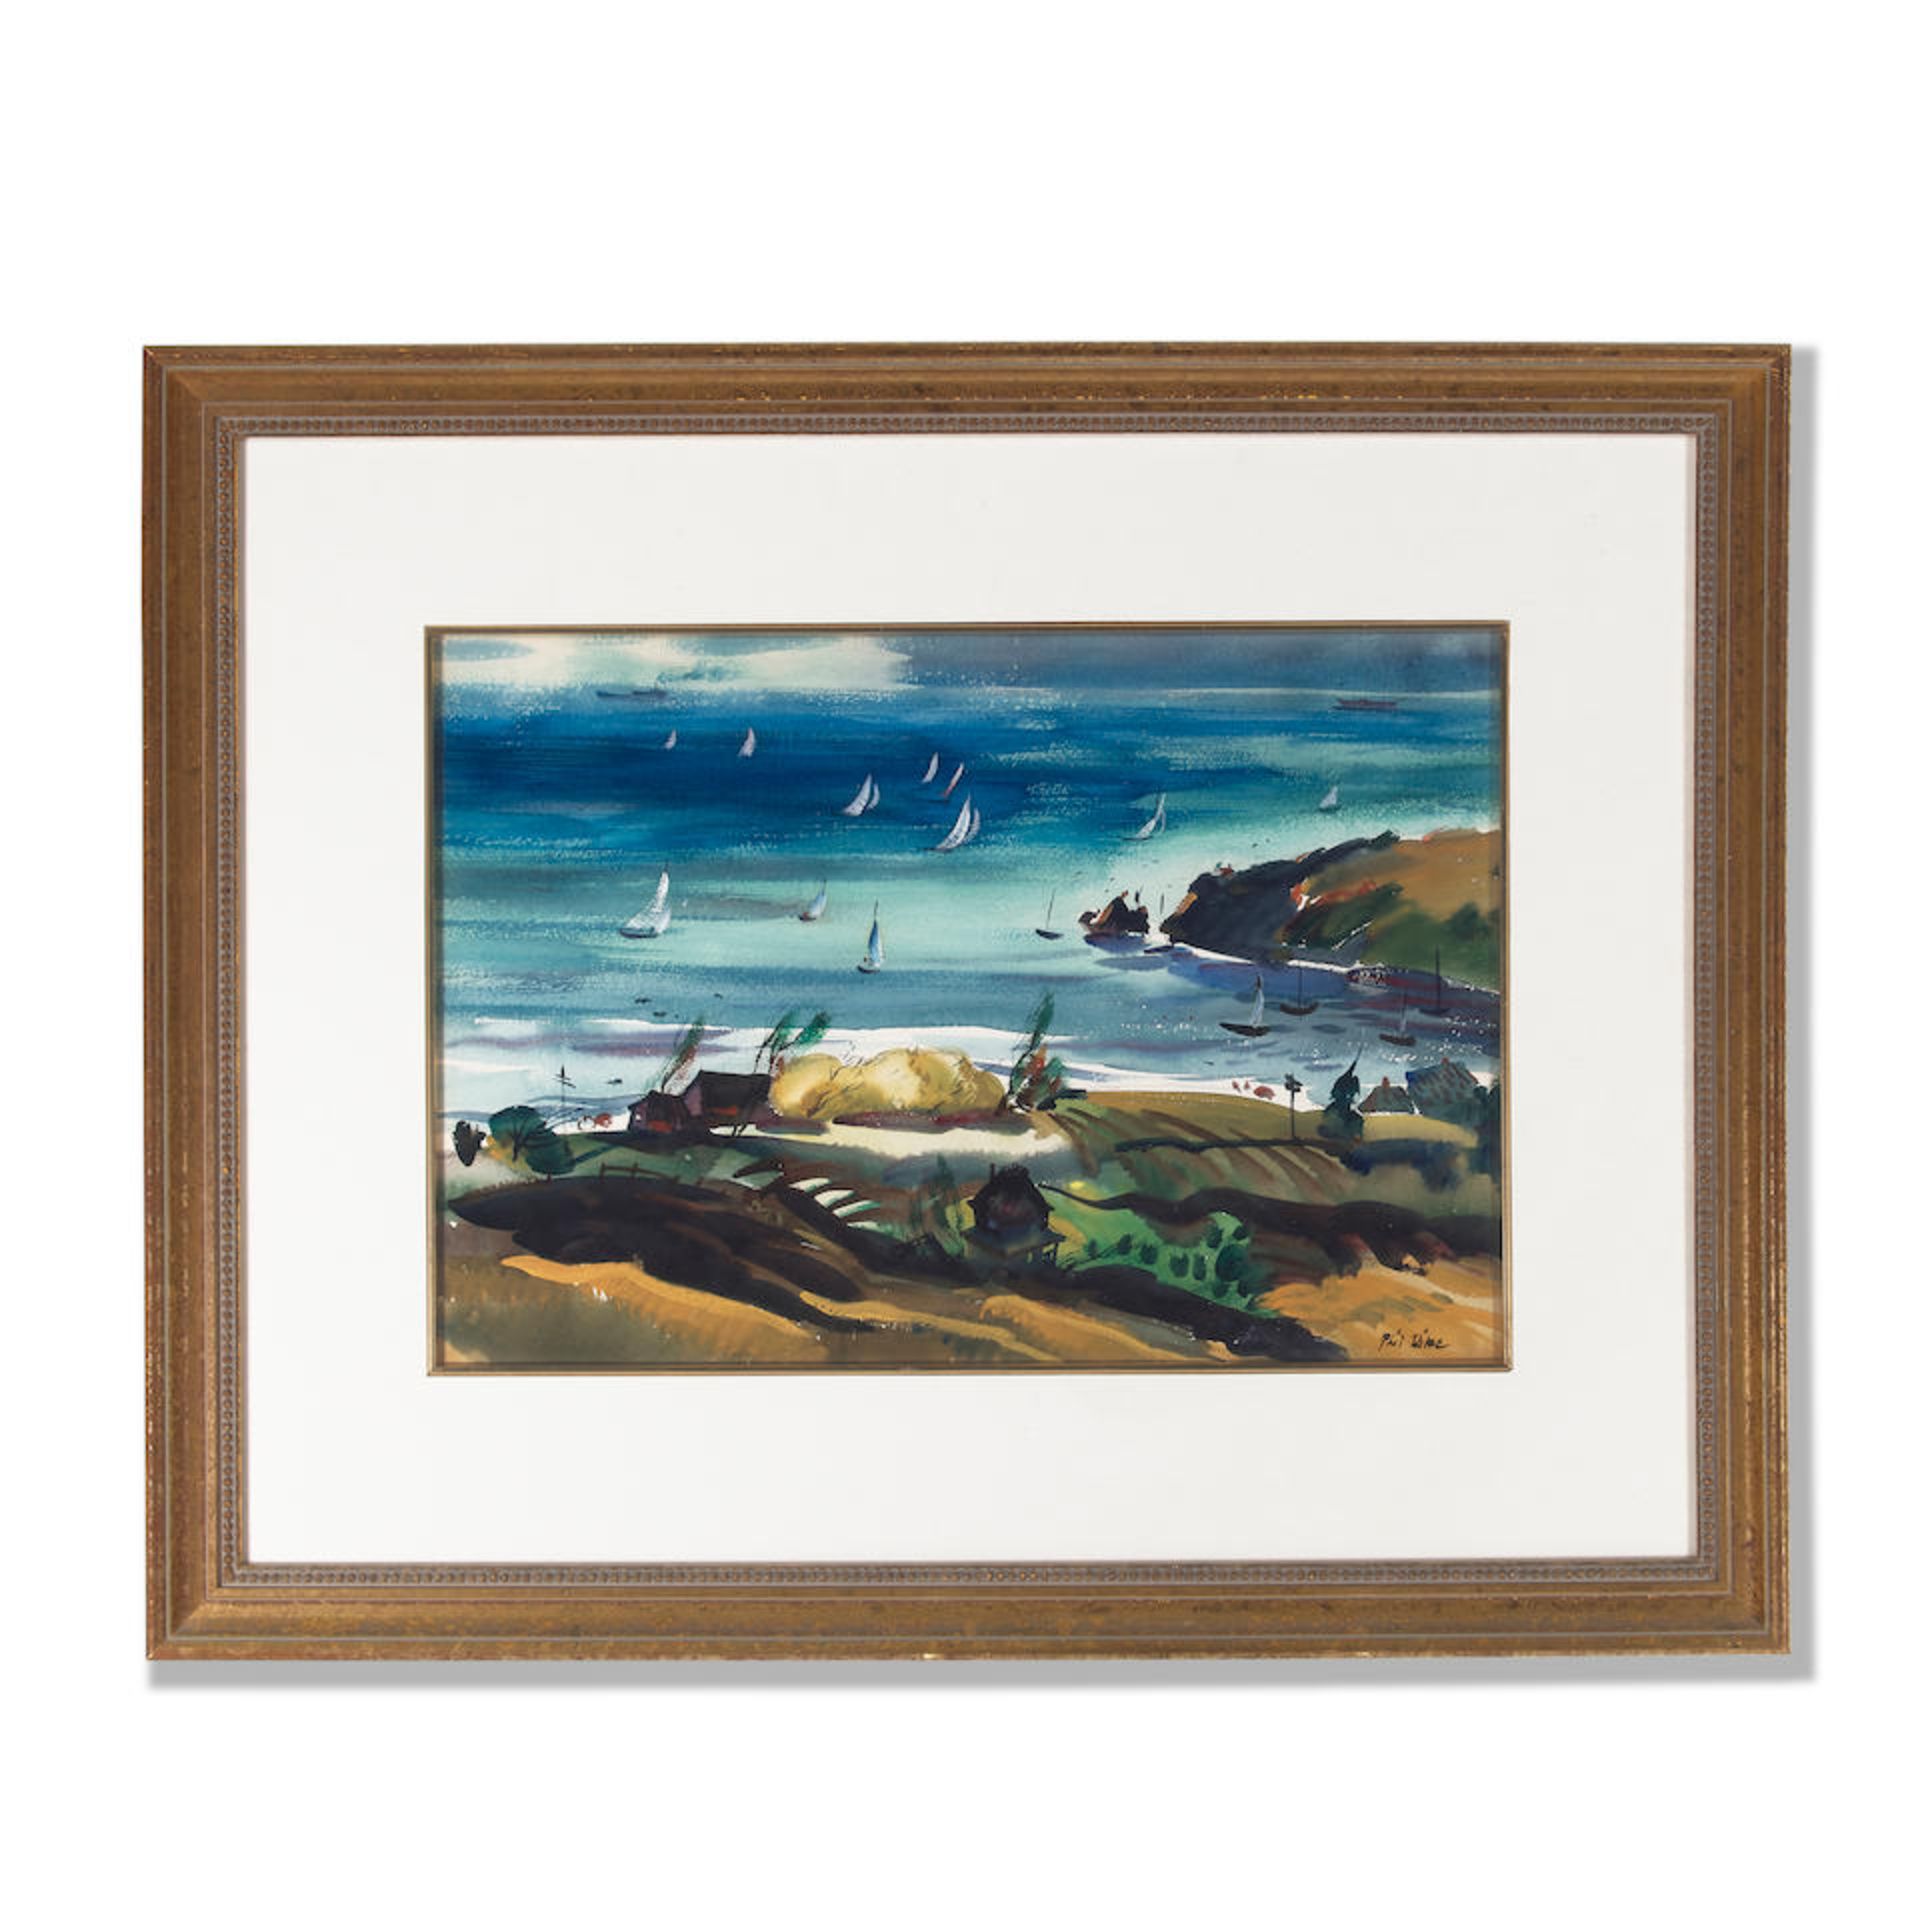 Phil Dike (1906-1990) Corona del Mar sight 12 3/4 x 18 3/4 in. framed 23 x 29 in. - Image 3 of 3